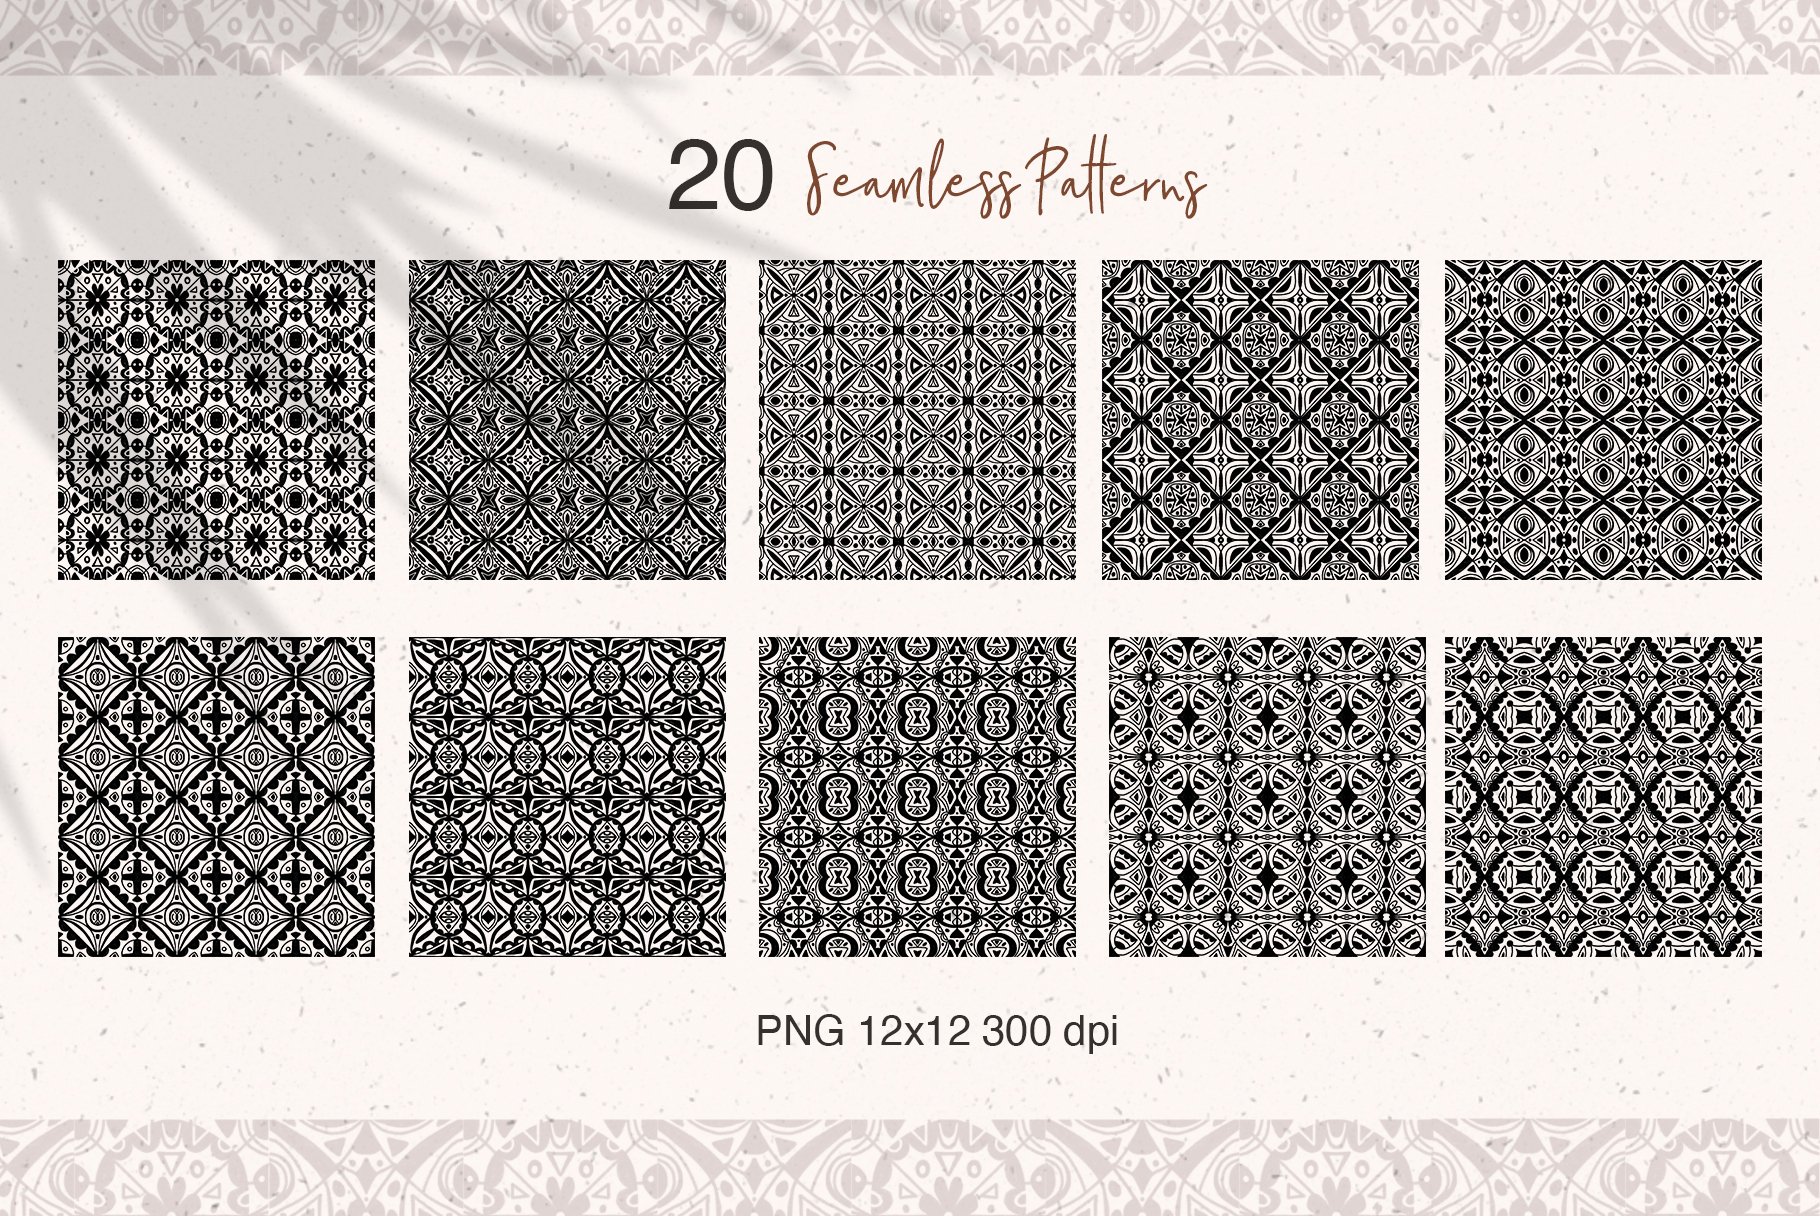 pattern1 1 copy 712